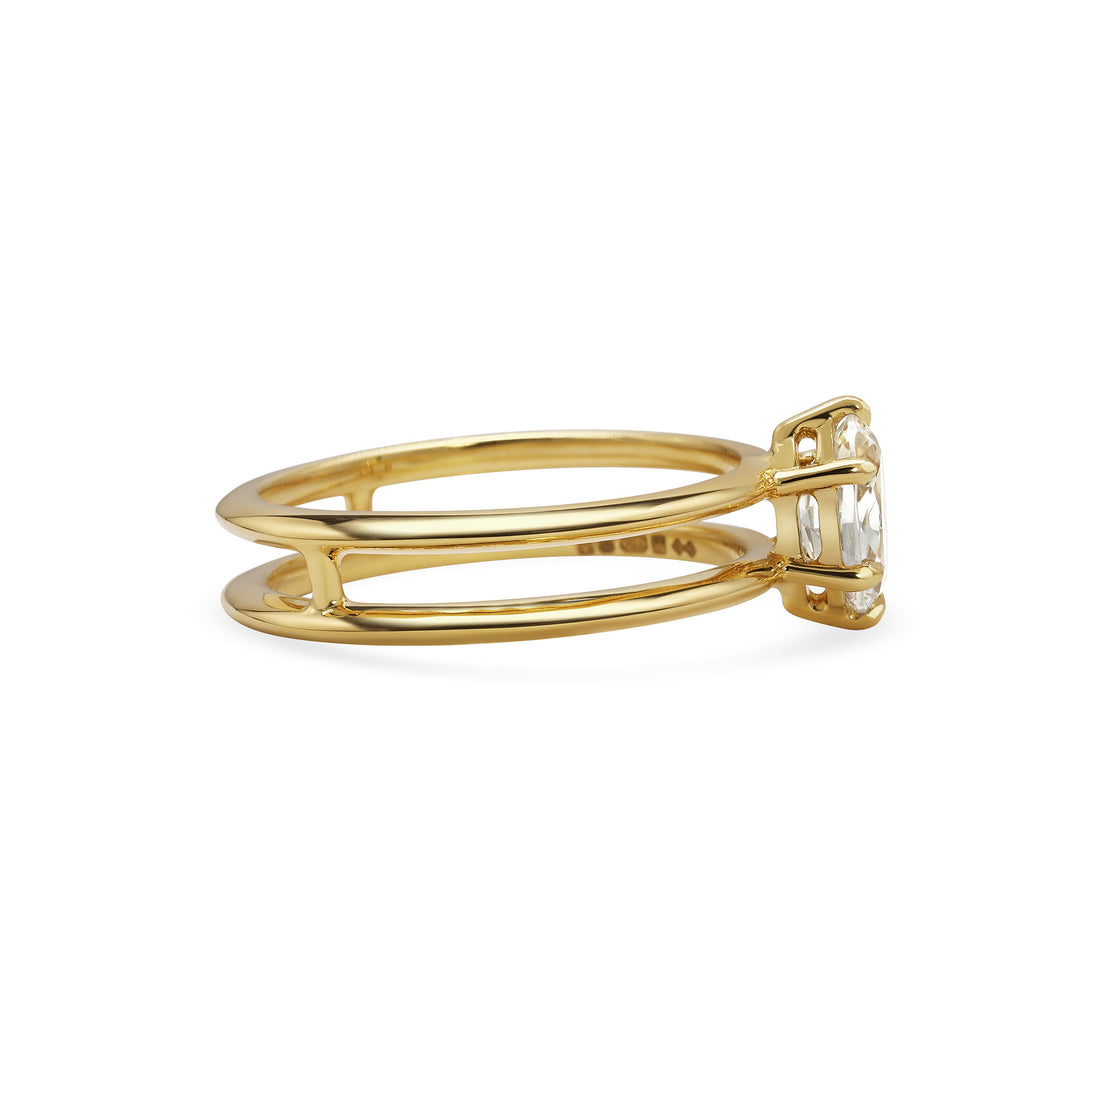  Adelia Double Band Diamond Ring by Rachel Boston | The Cut London